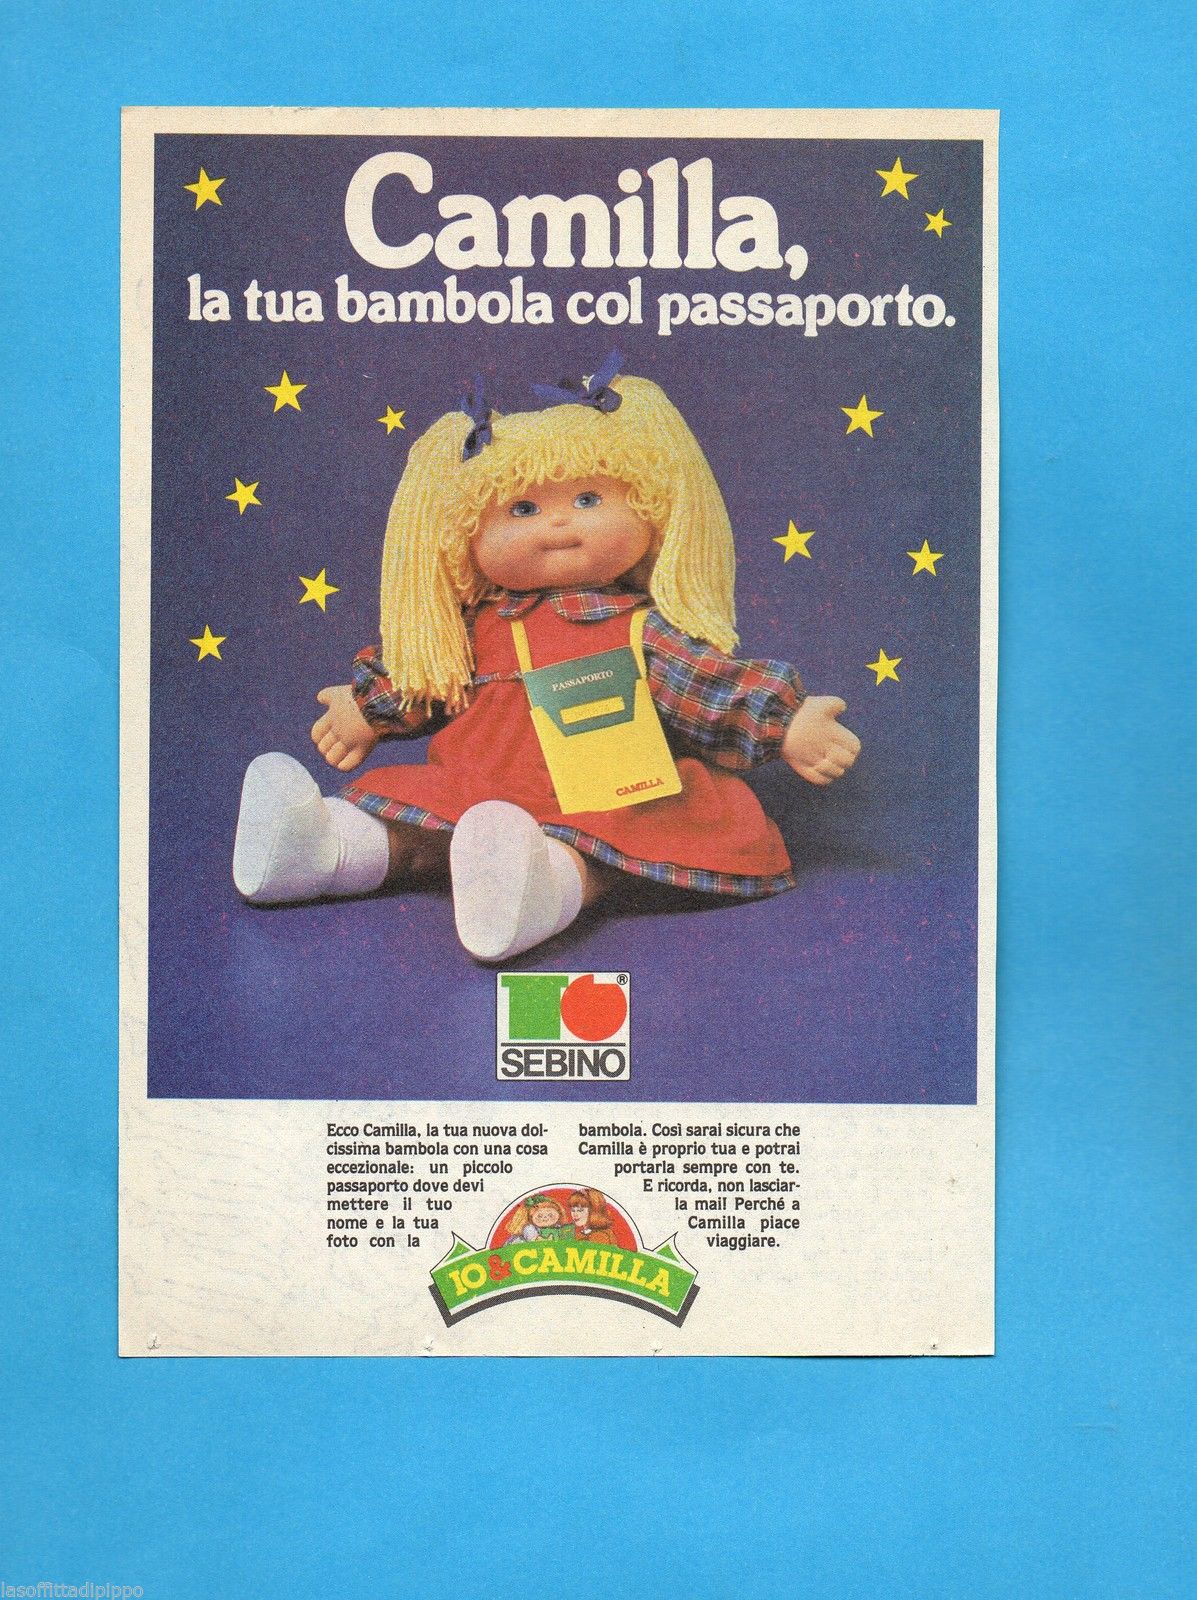 Milla Camilla - Boneca de papel personalizada para imprimir